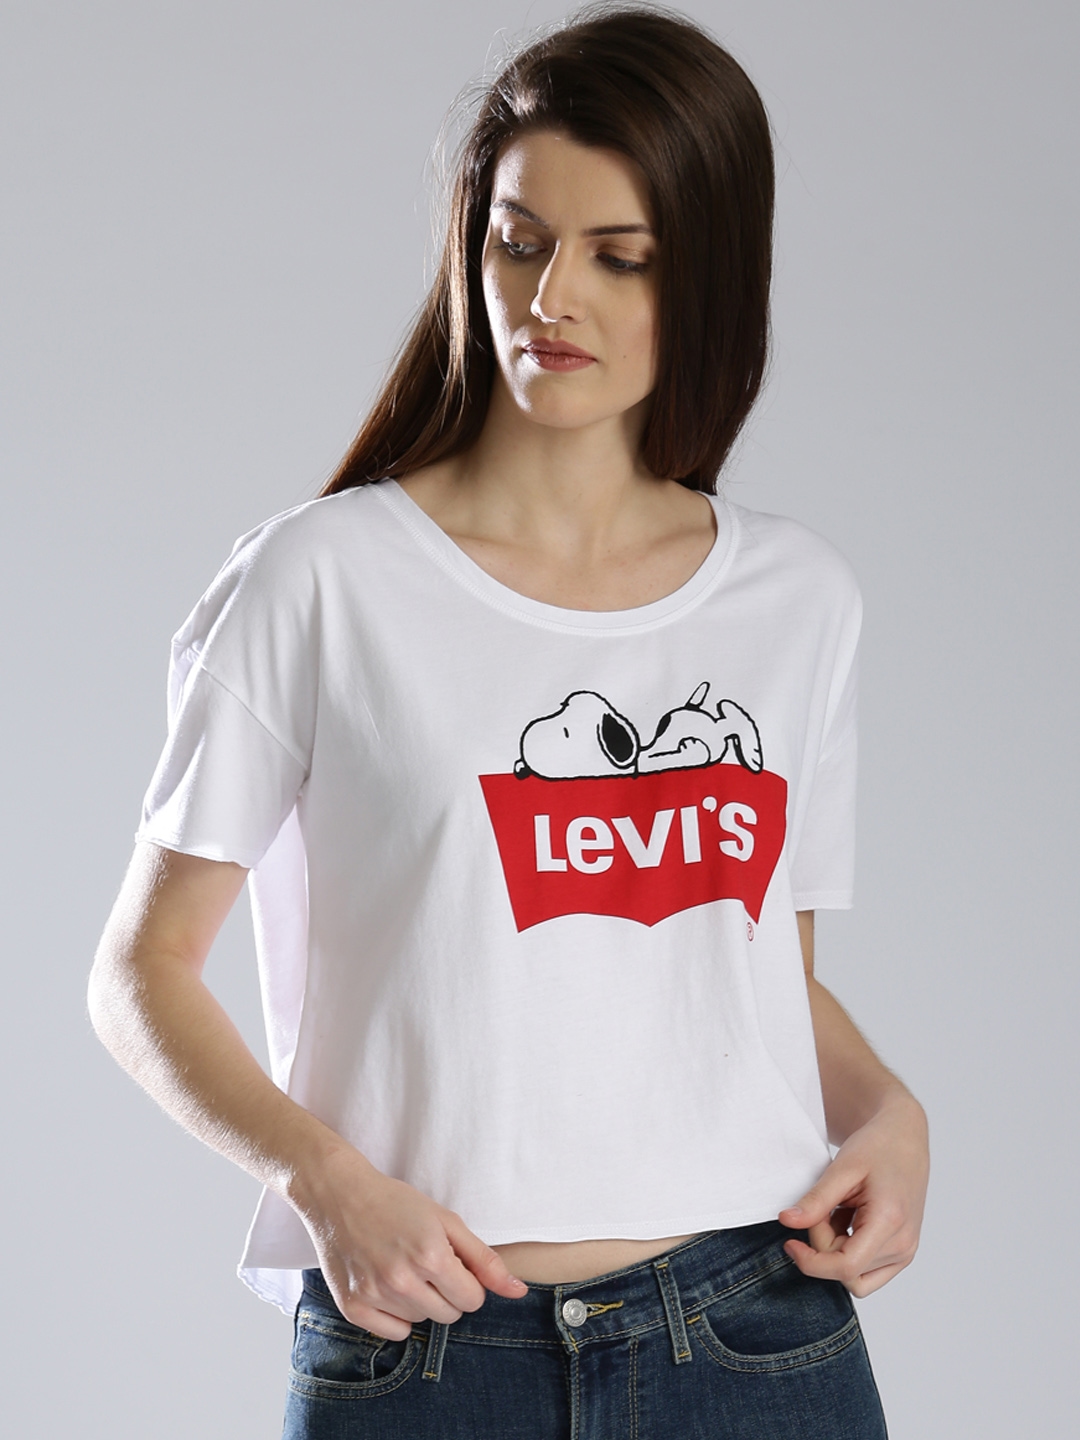 levis t shirt women's white